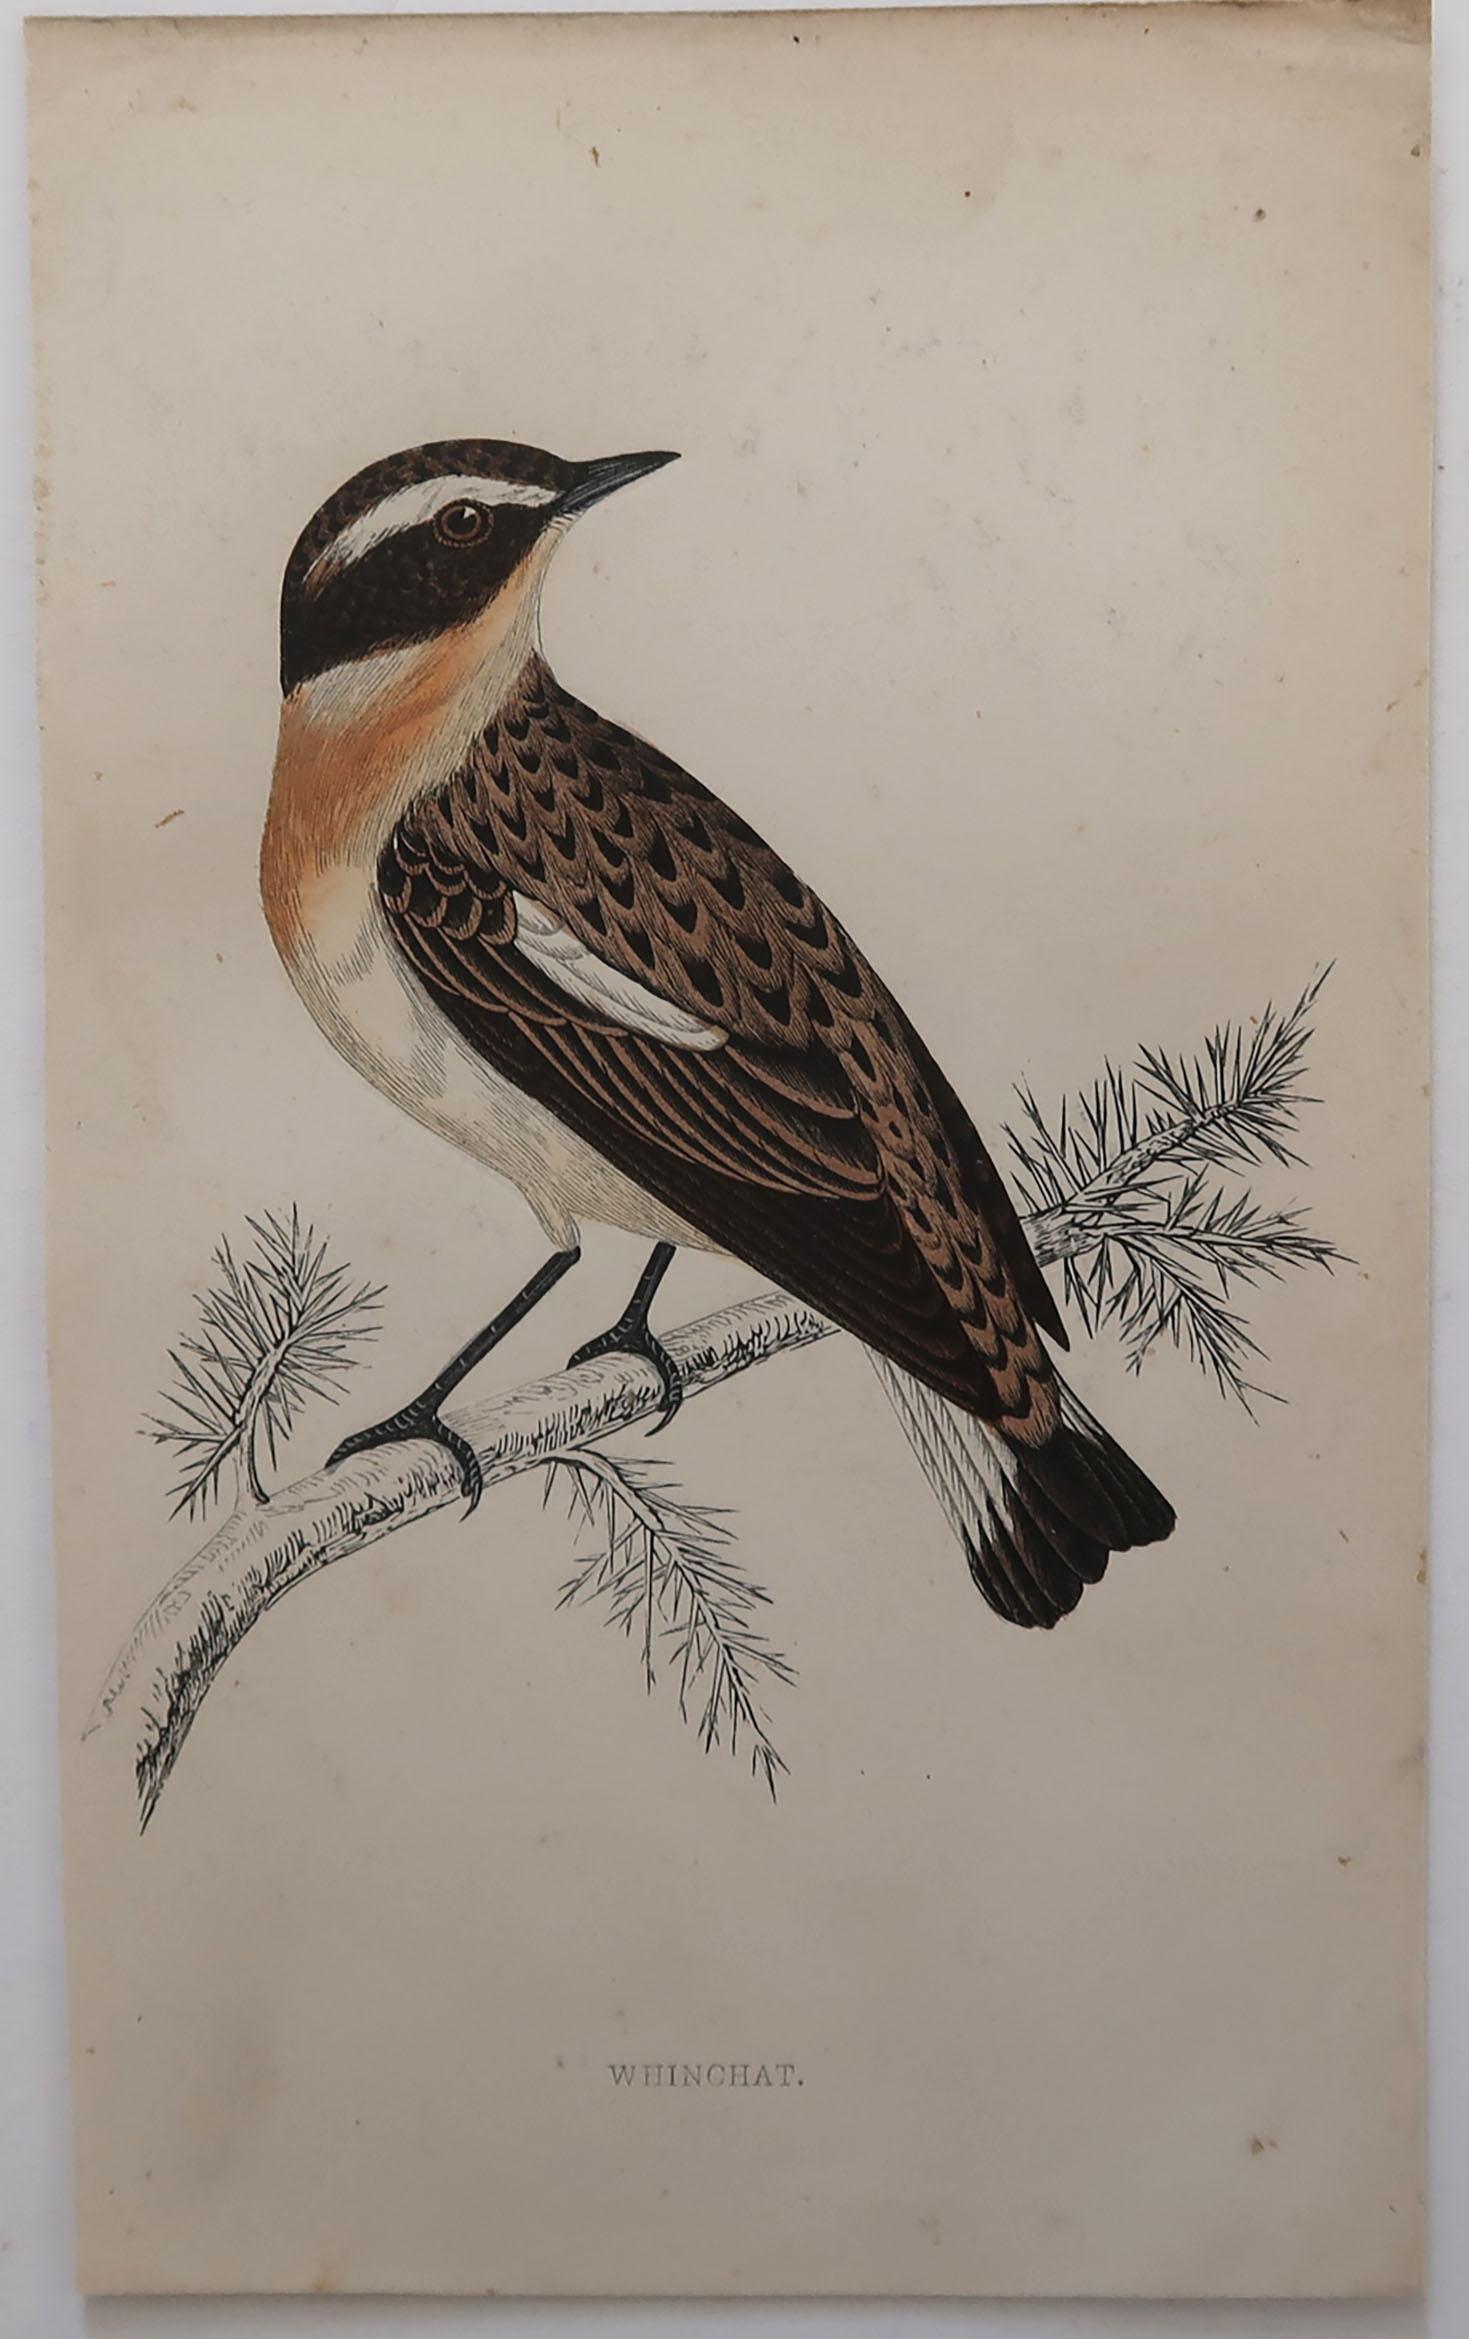 Folk Art Original Antique Bird Print, the Winchat, circa 1870